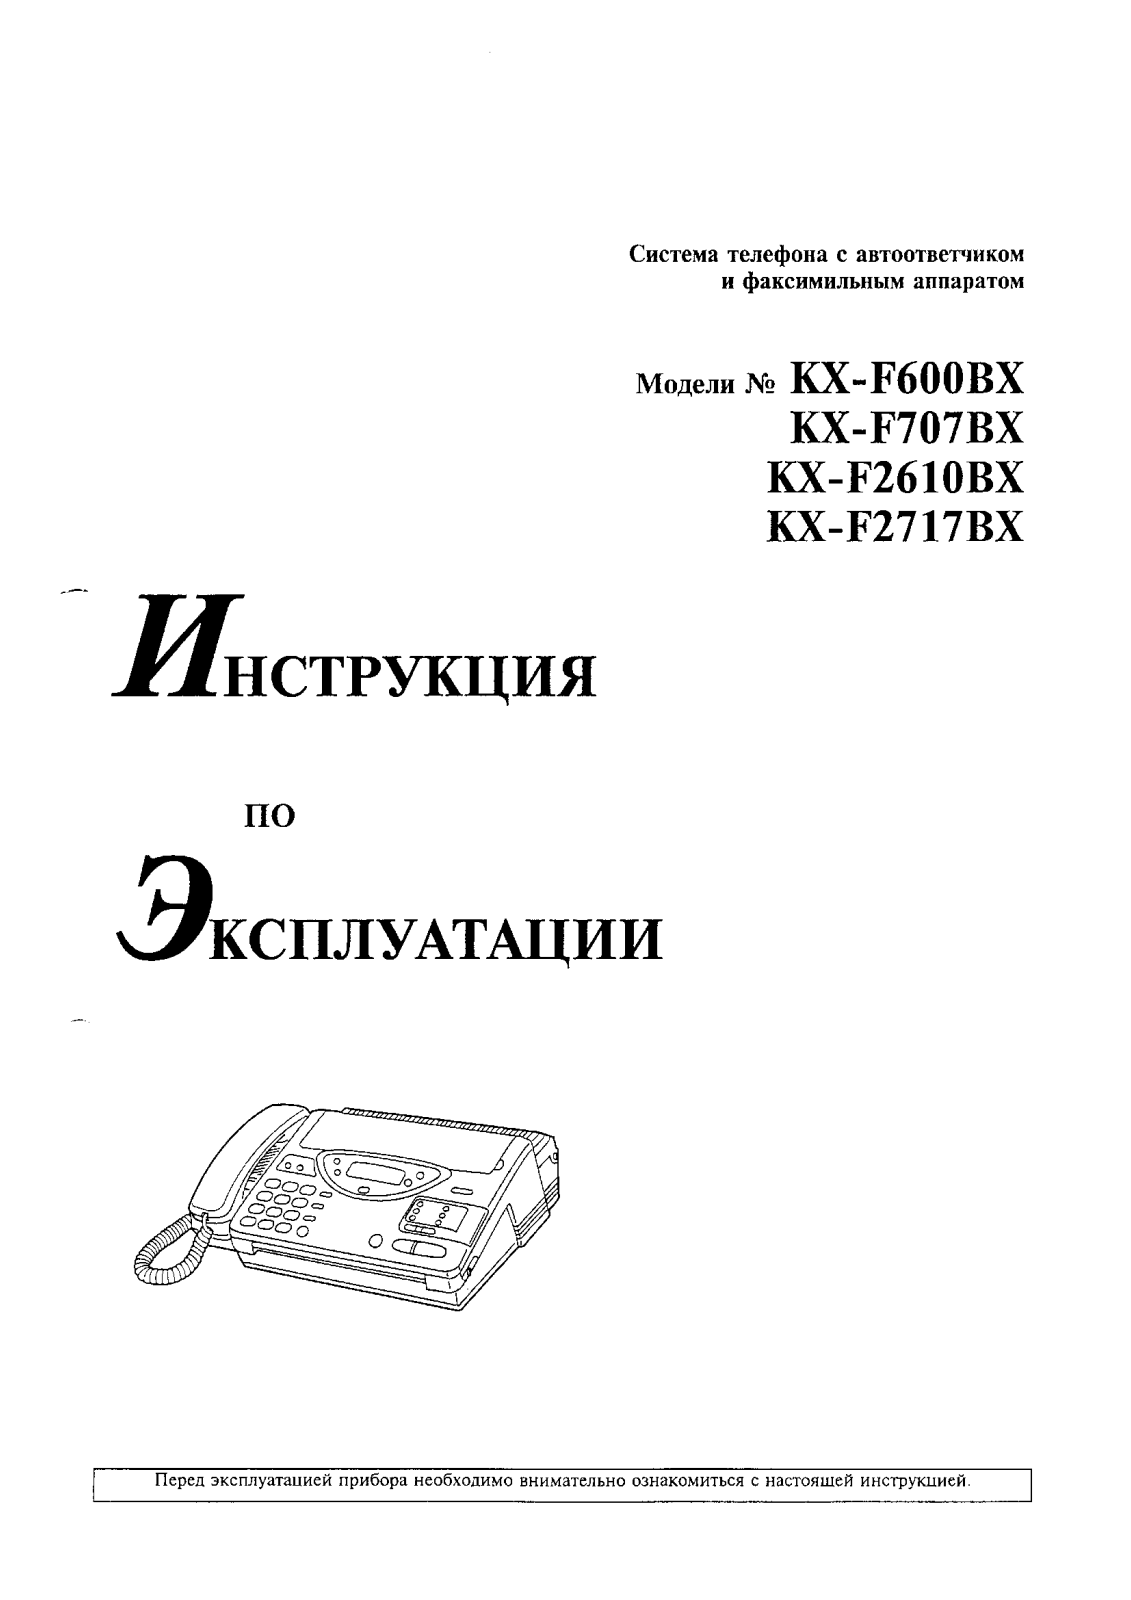 Panasonic KX-F2717BX User Manual